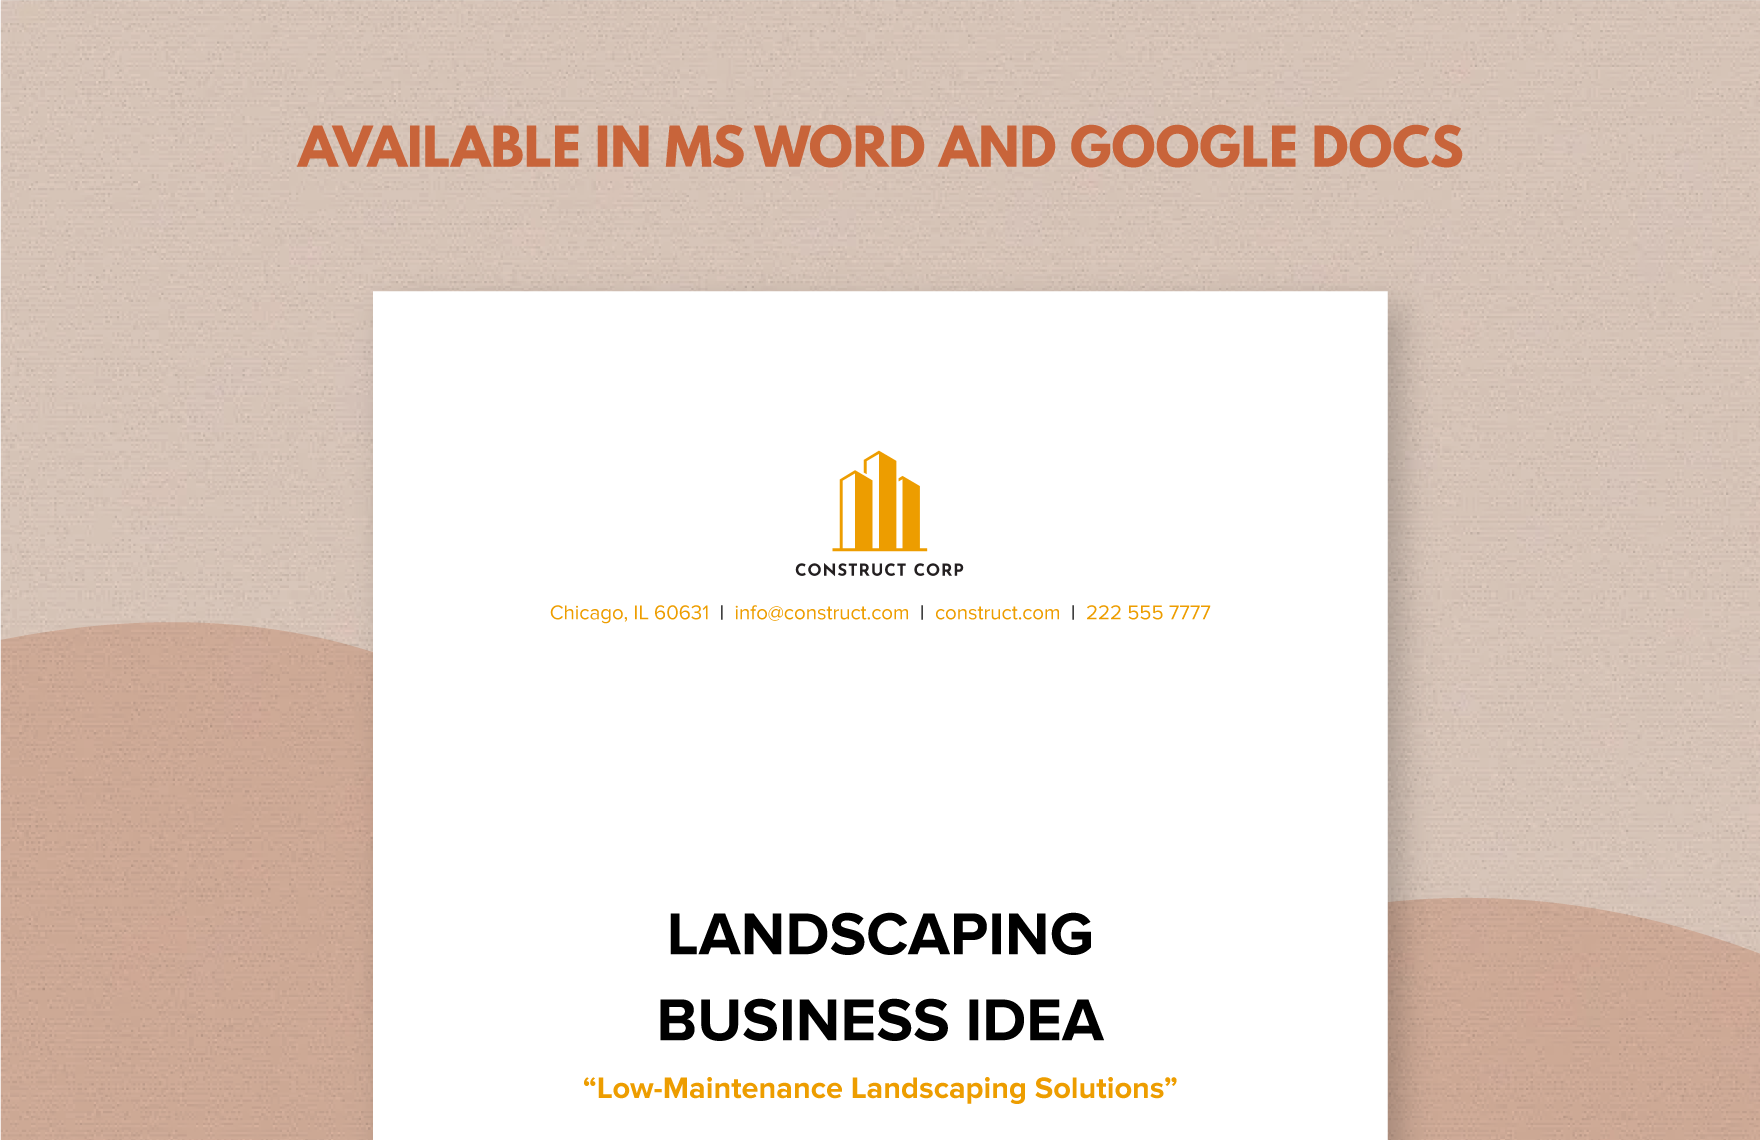 Landscaping Business Idea